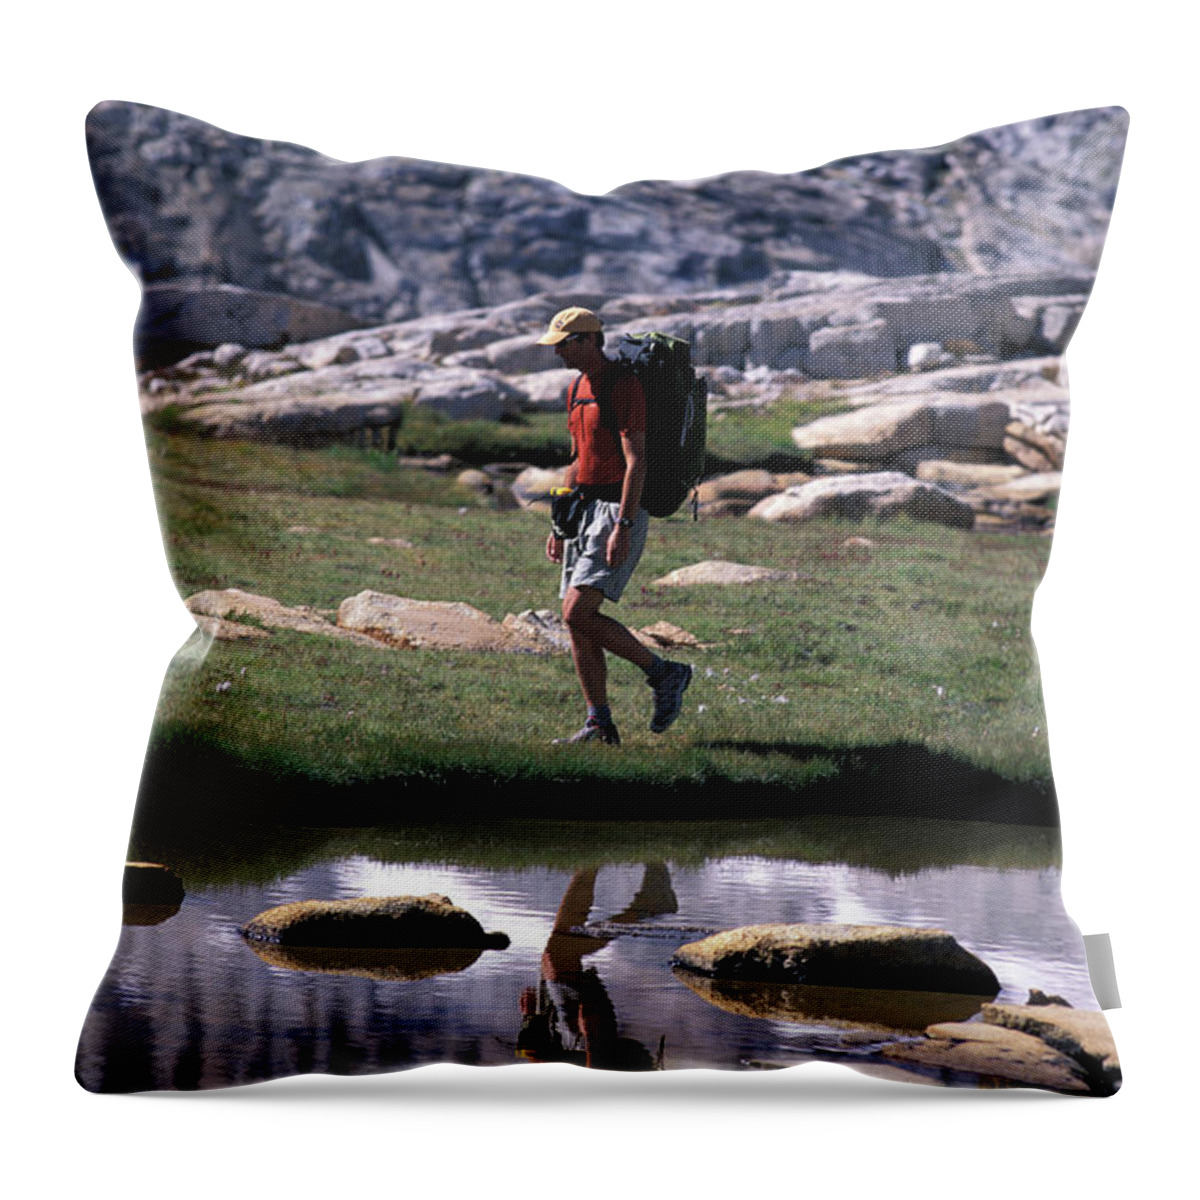 Adult Throw Pillow featuring the photograph A Hiker Walking Through An Alpine by Corey Rich